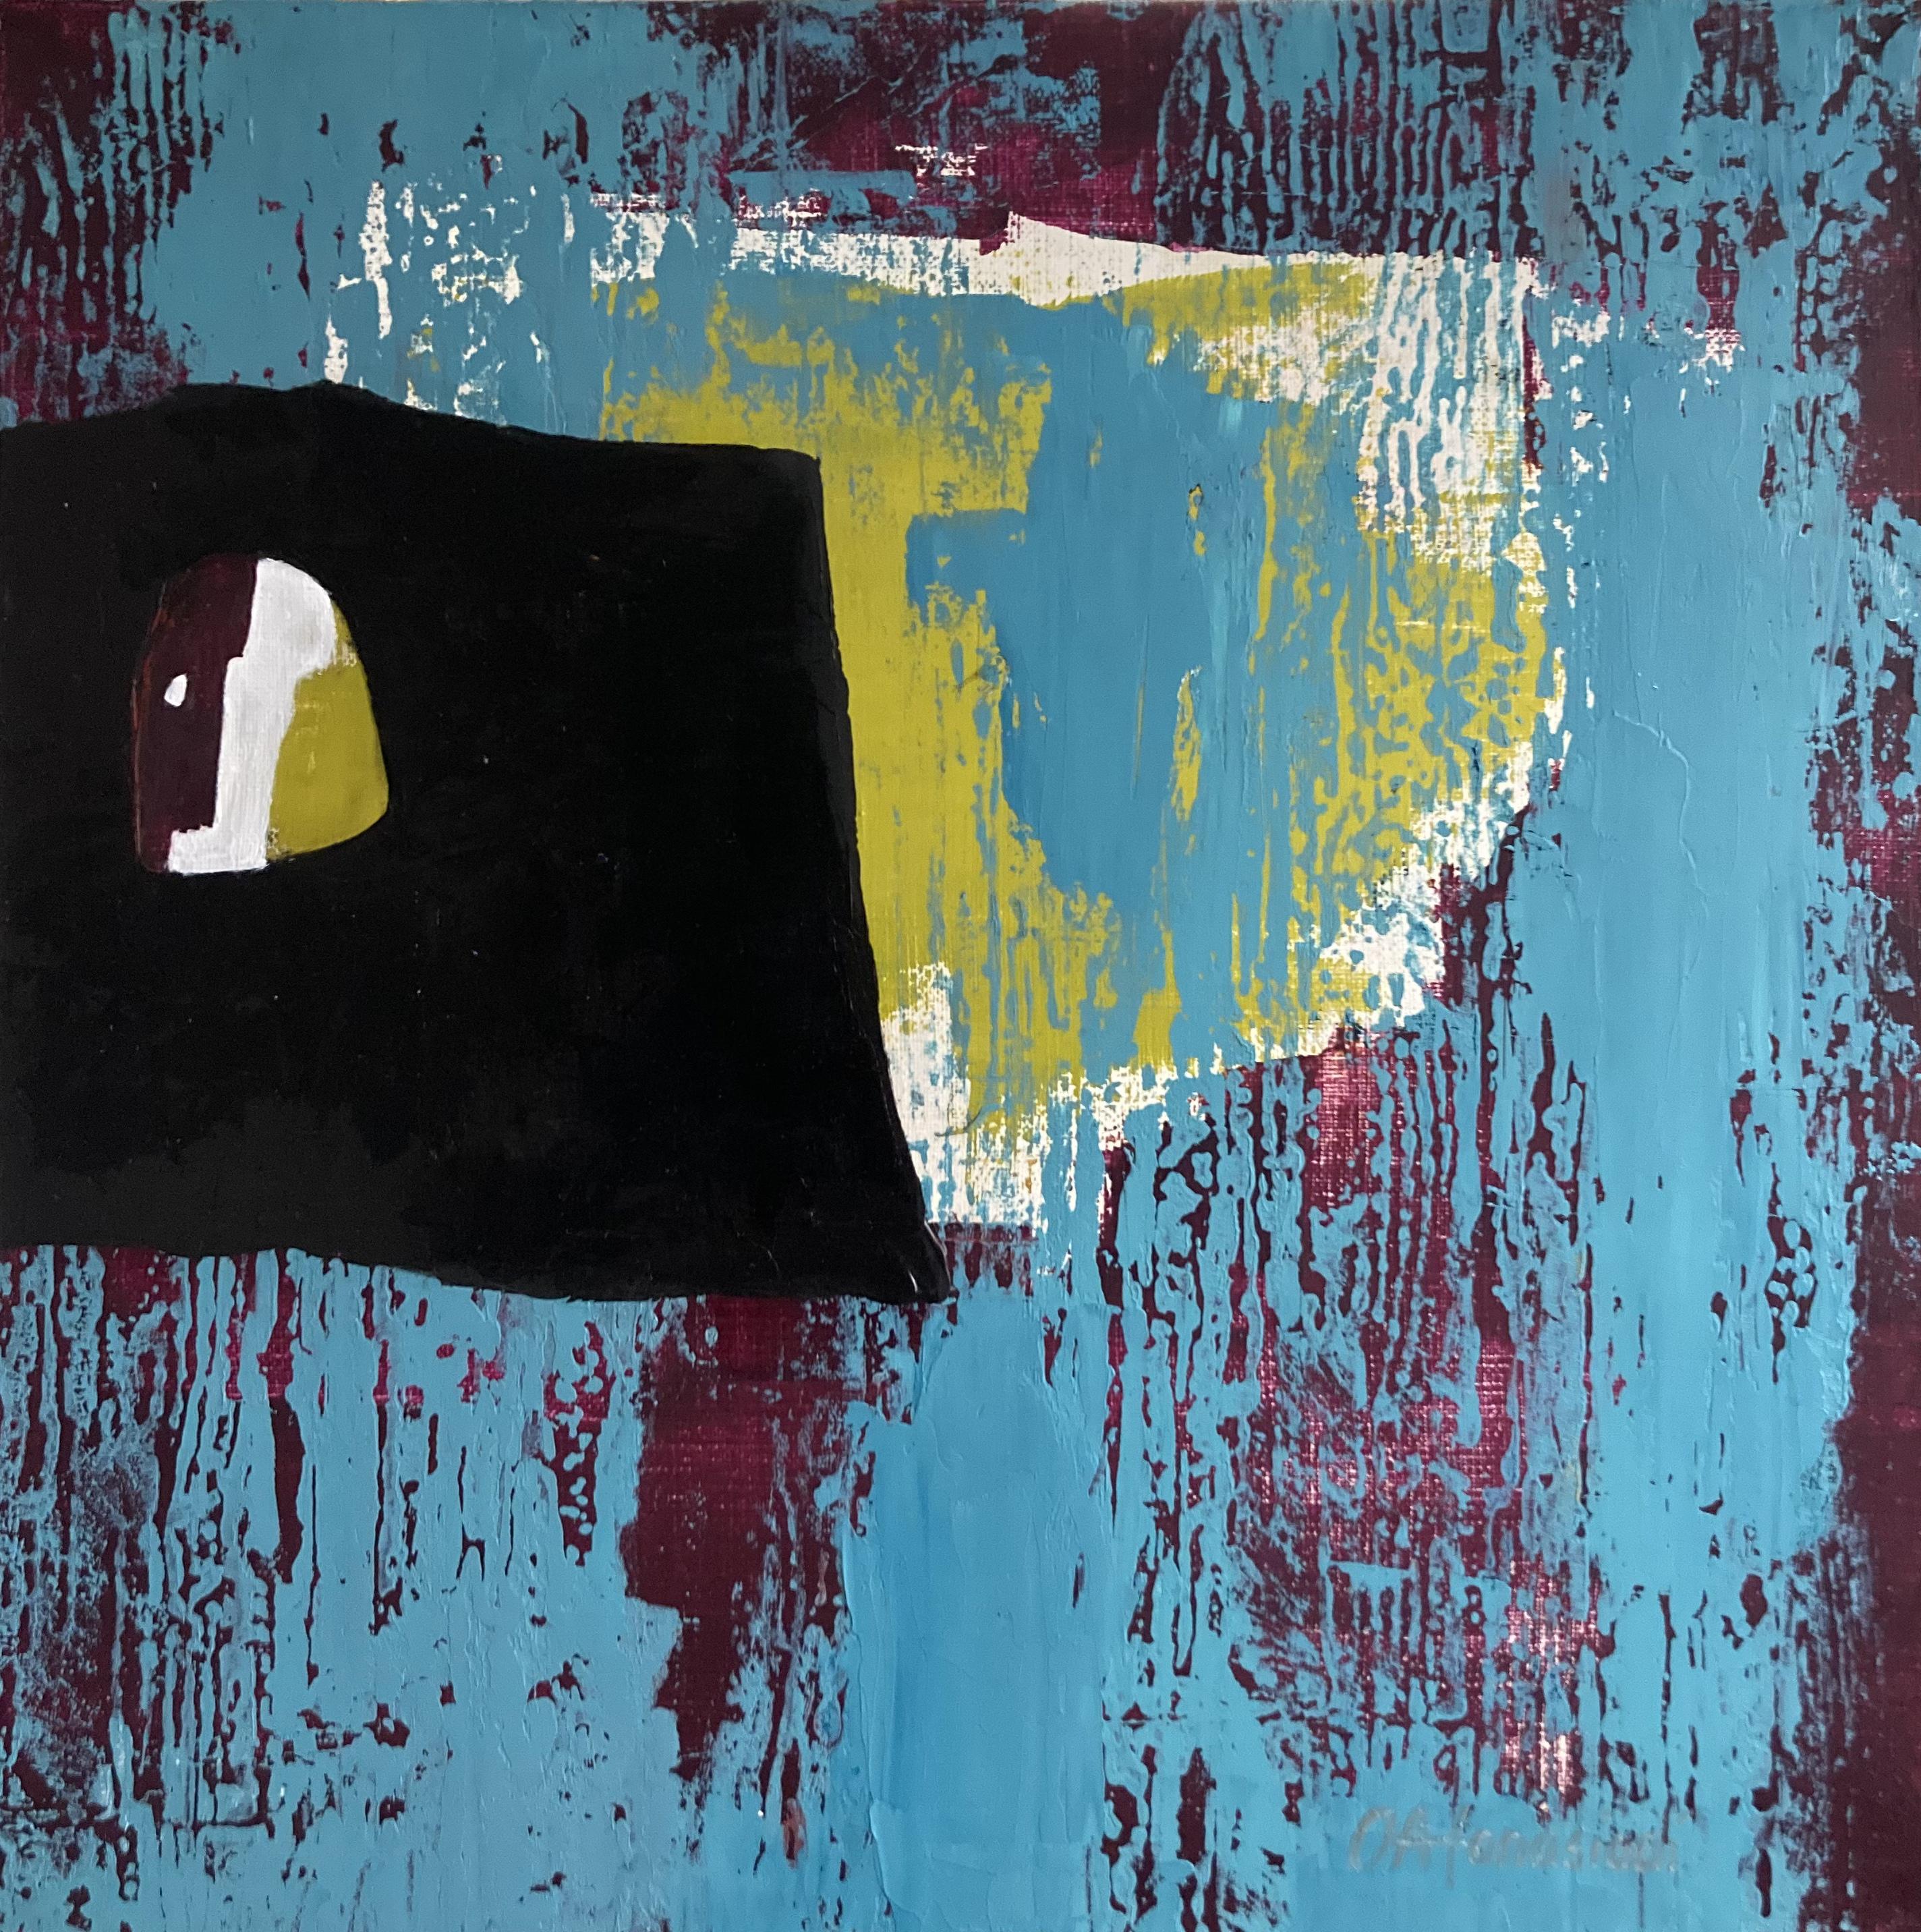 Abstract Painting Olga Afanasiadi - L'île sous l'eau - abstraction conceptuelle à l'huile 